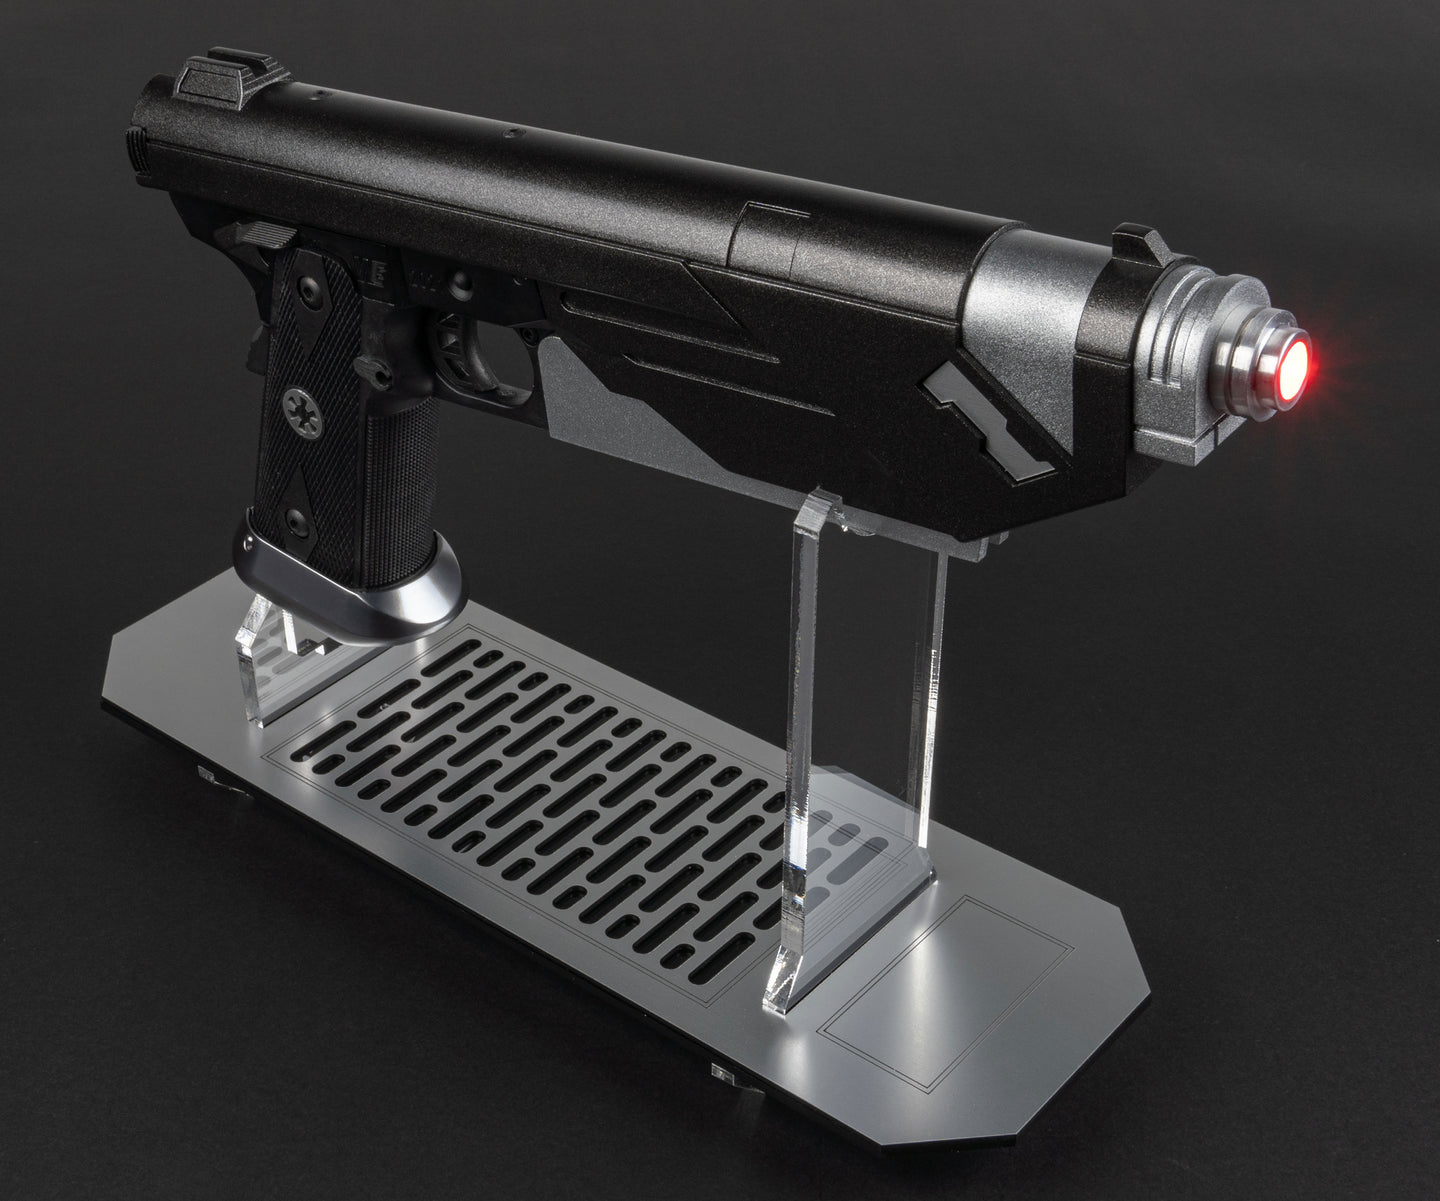 WeTech-35 Blaster Pistol (Black/Silver)